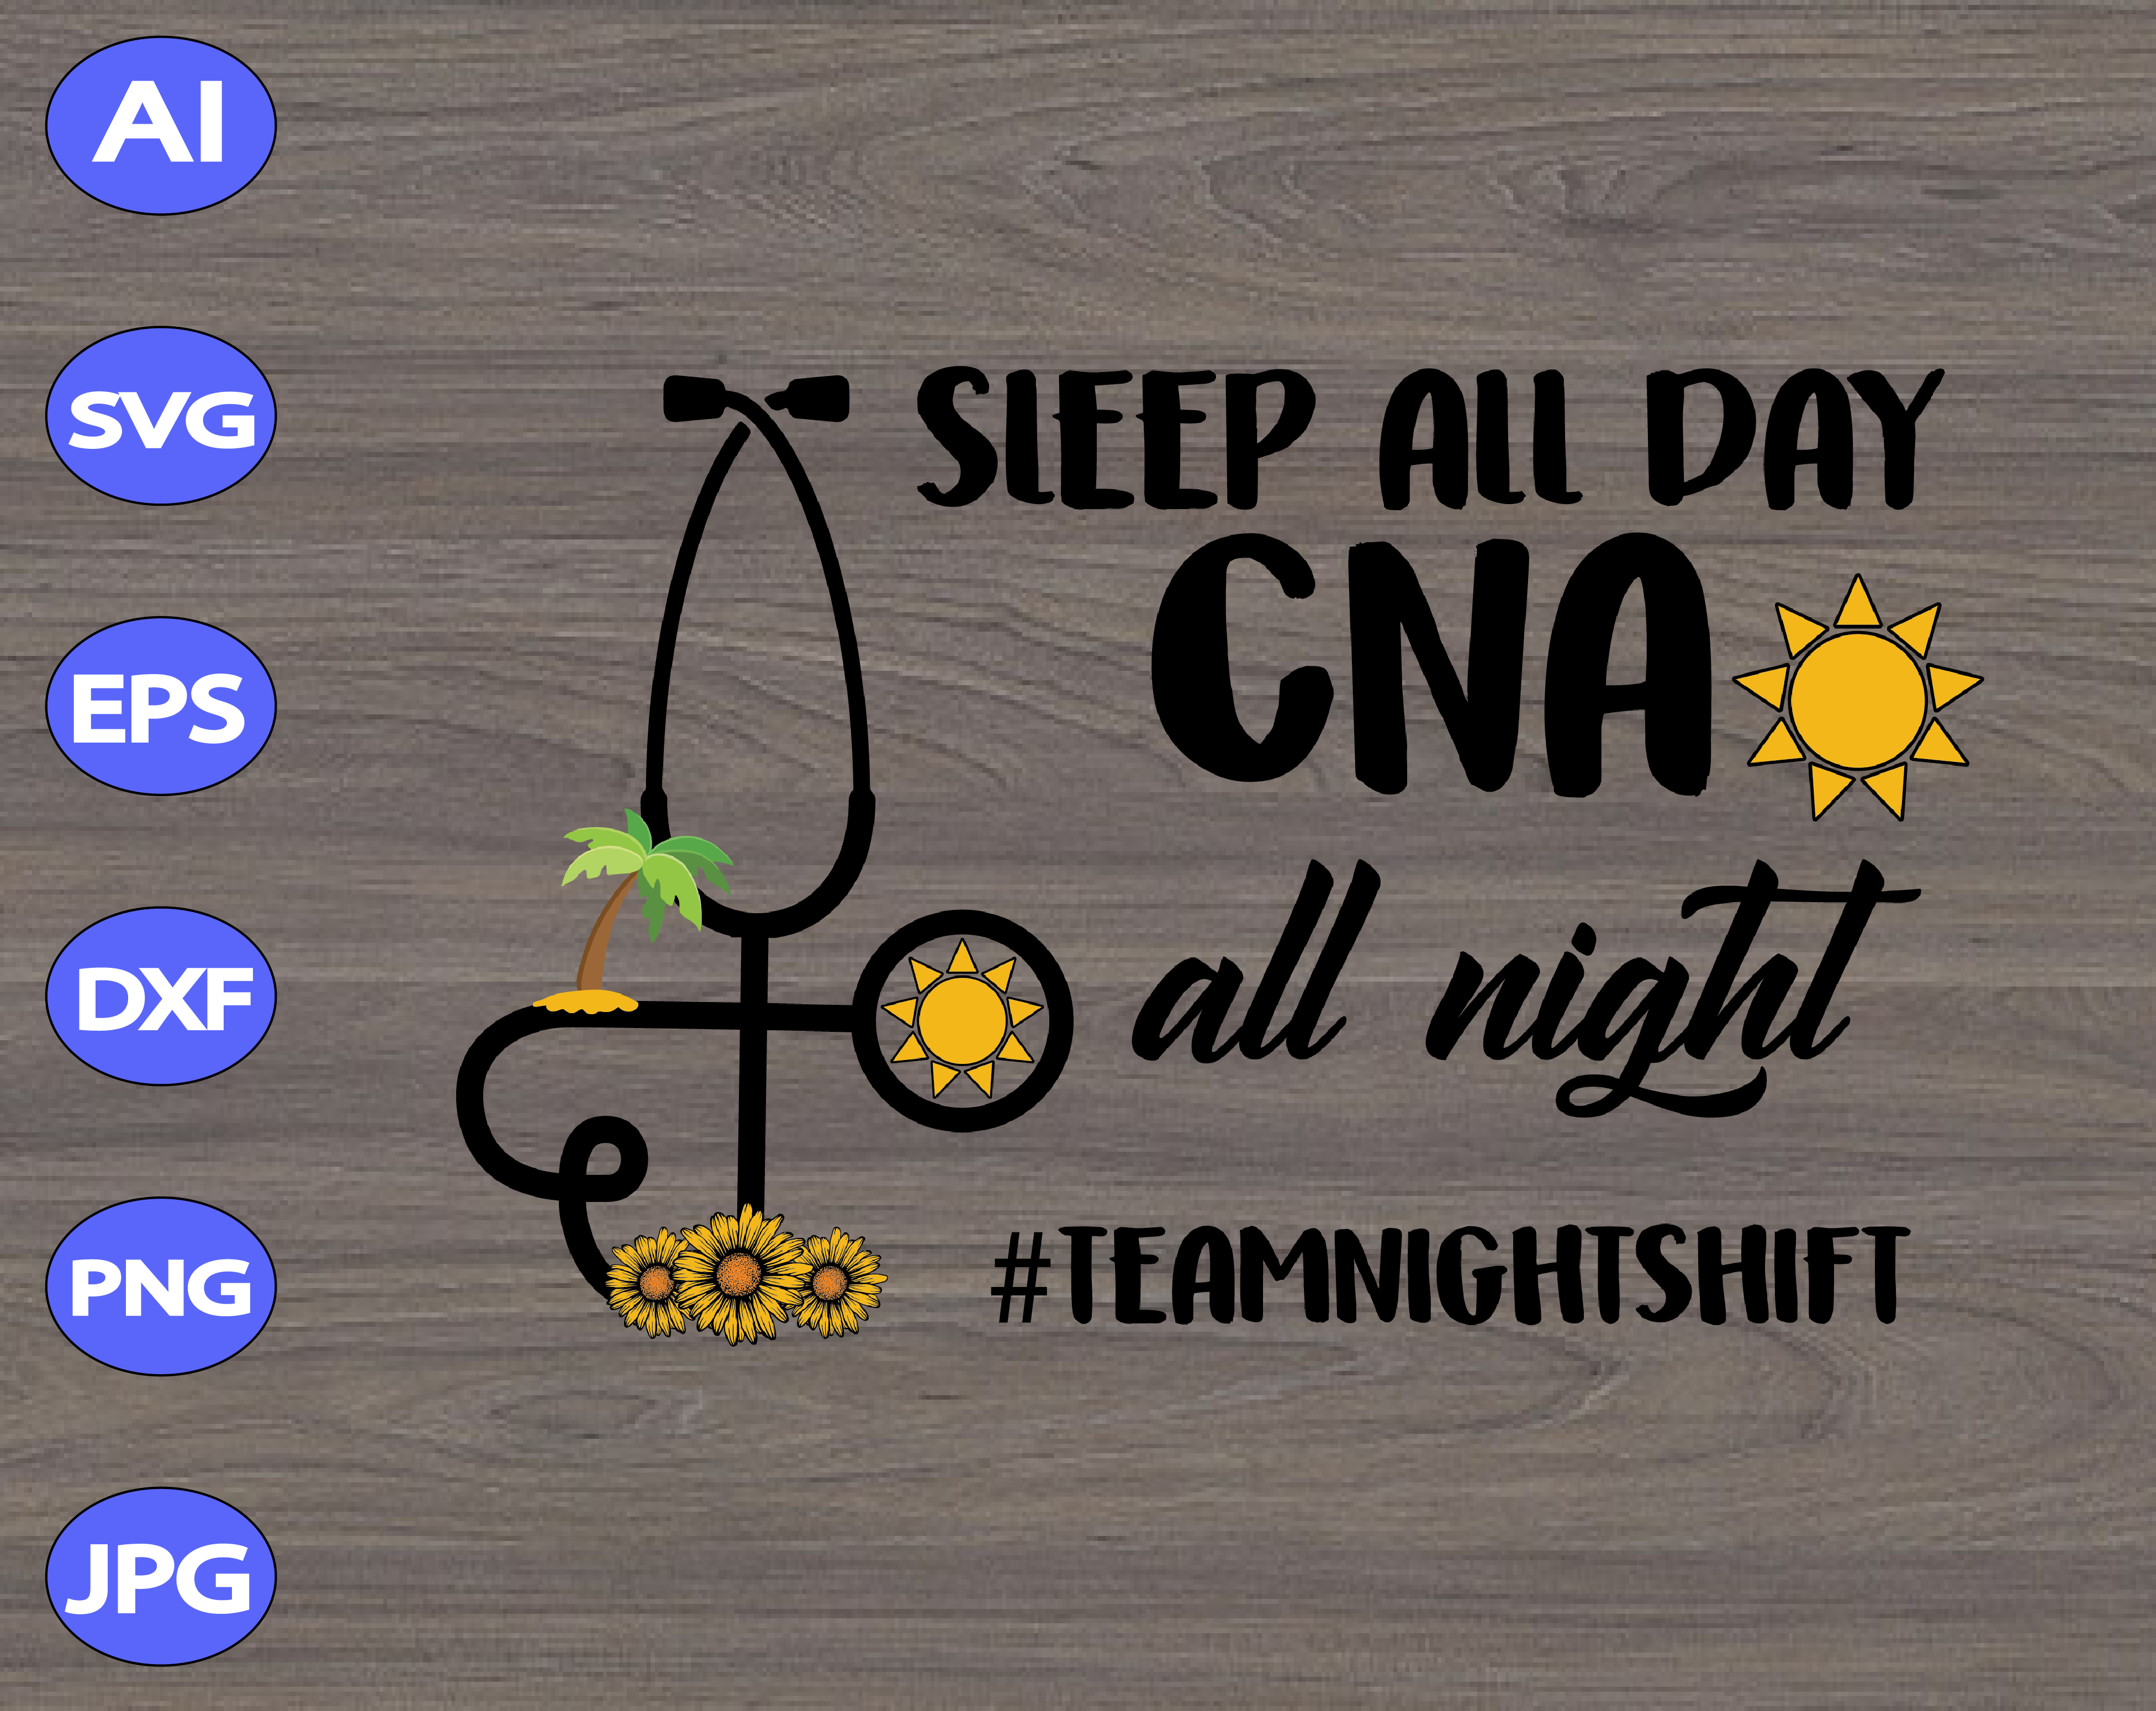 Download Sleep All Day Cna All Night Teamnightshift Svg Dxf Eps Png Digital Download Designbtf Com